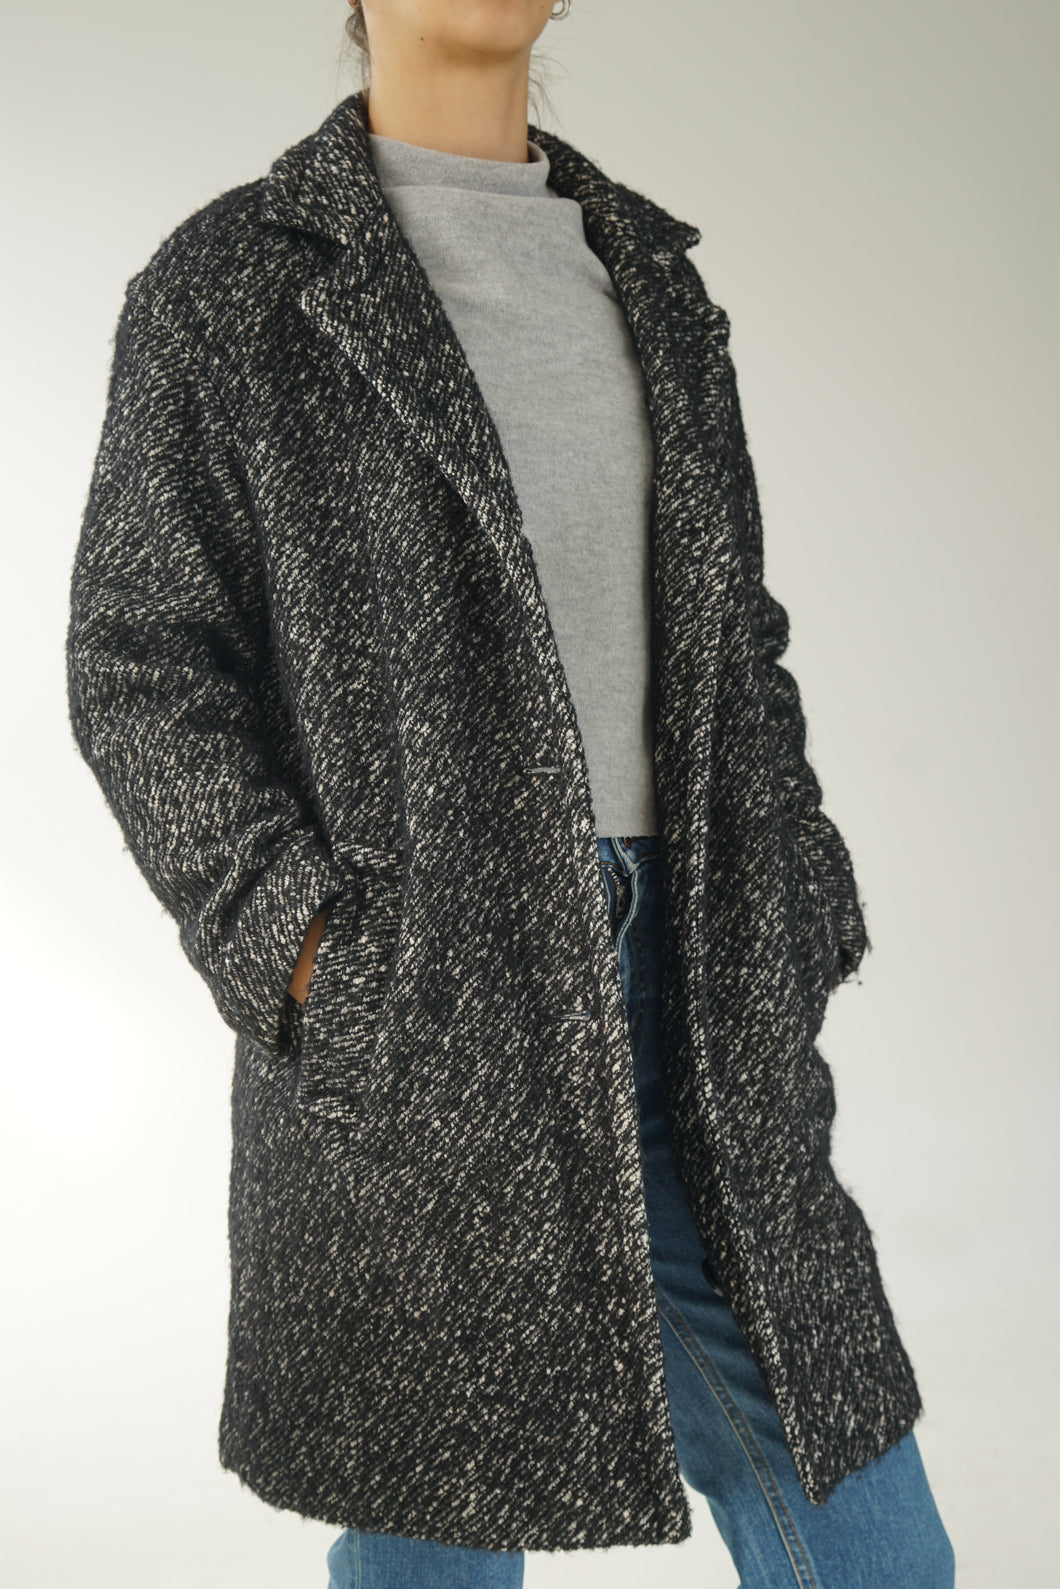 Wool blend coat Anne Klein size small